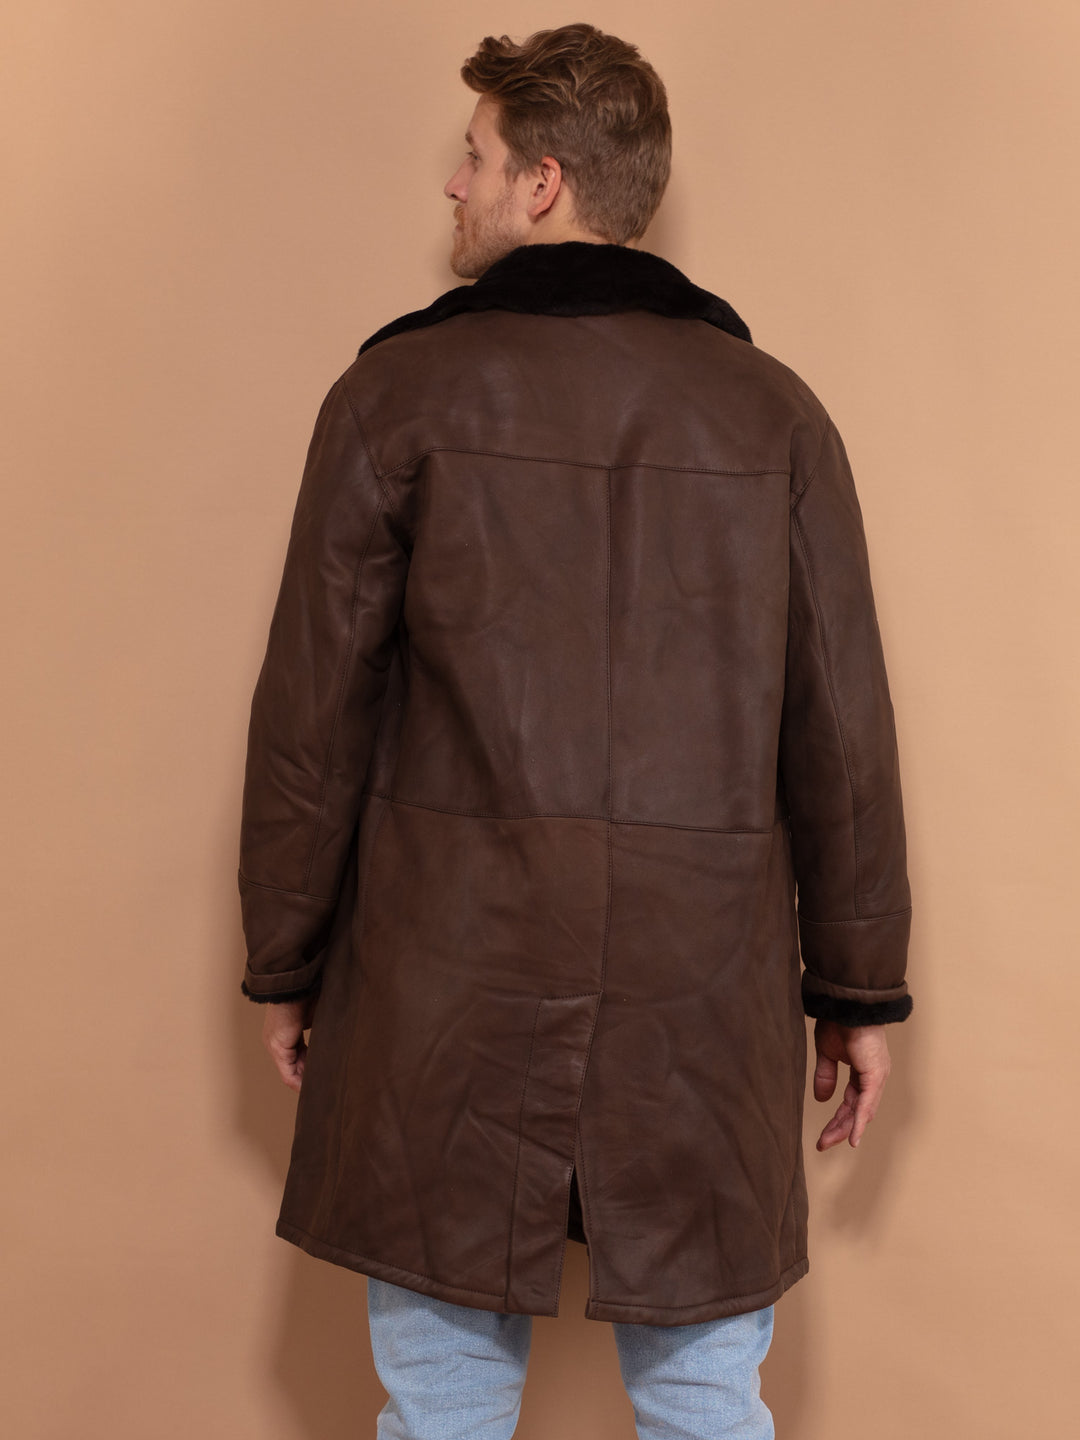 Soft Leather Shearling Coat 90s, Size Large, Vintage Men Classic Coat, Brown Sheepskin Coat, Vintage Outerwear, Winter Overcoat